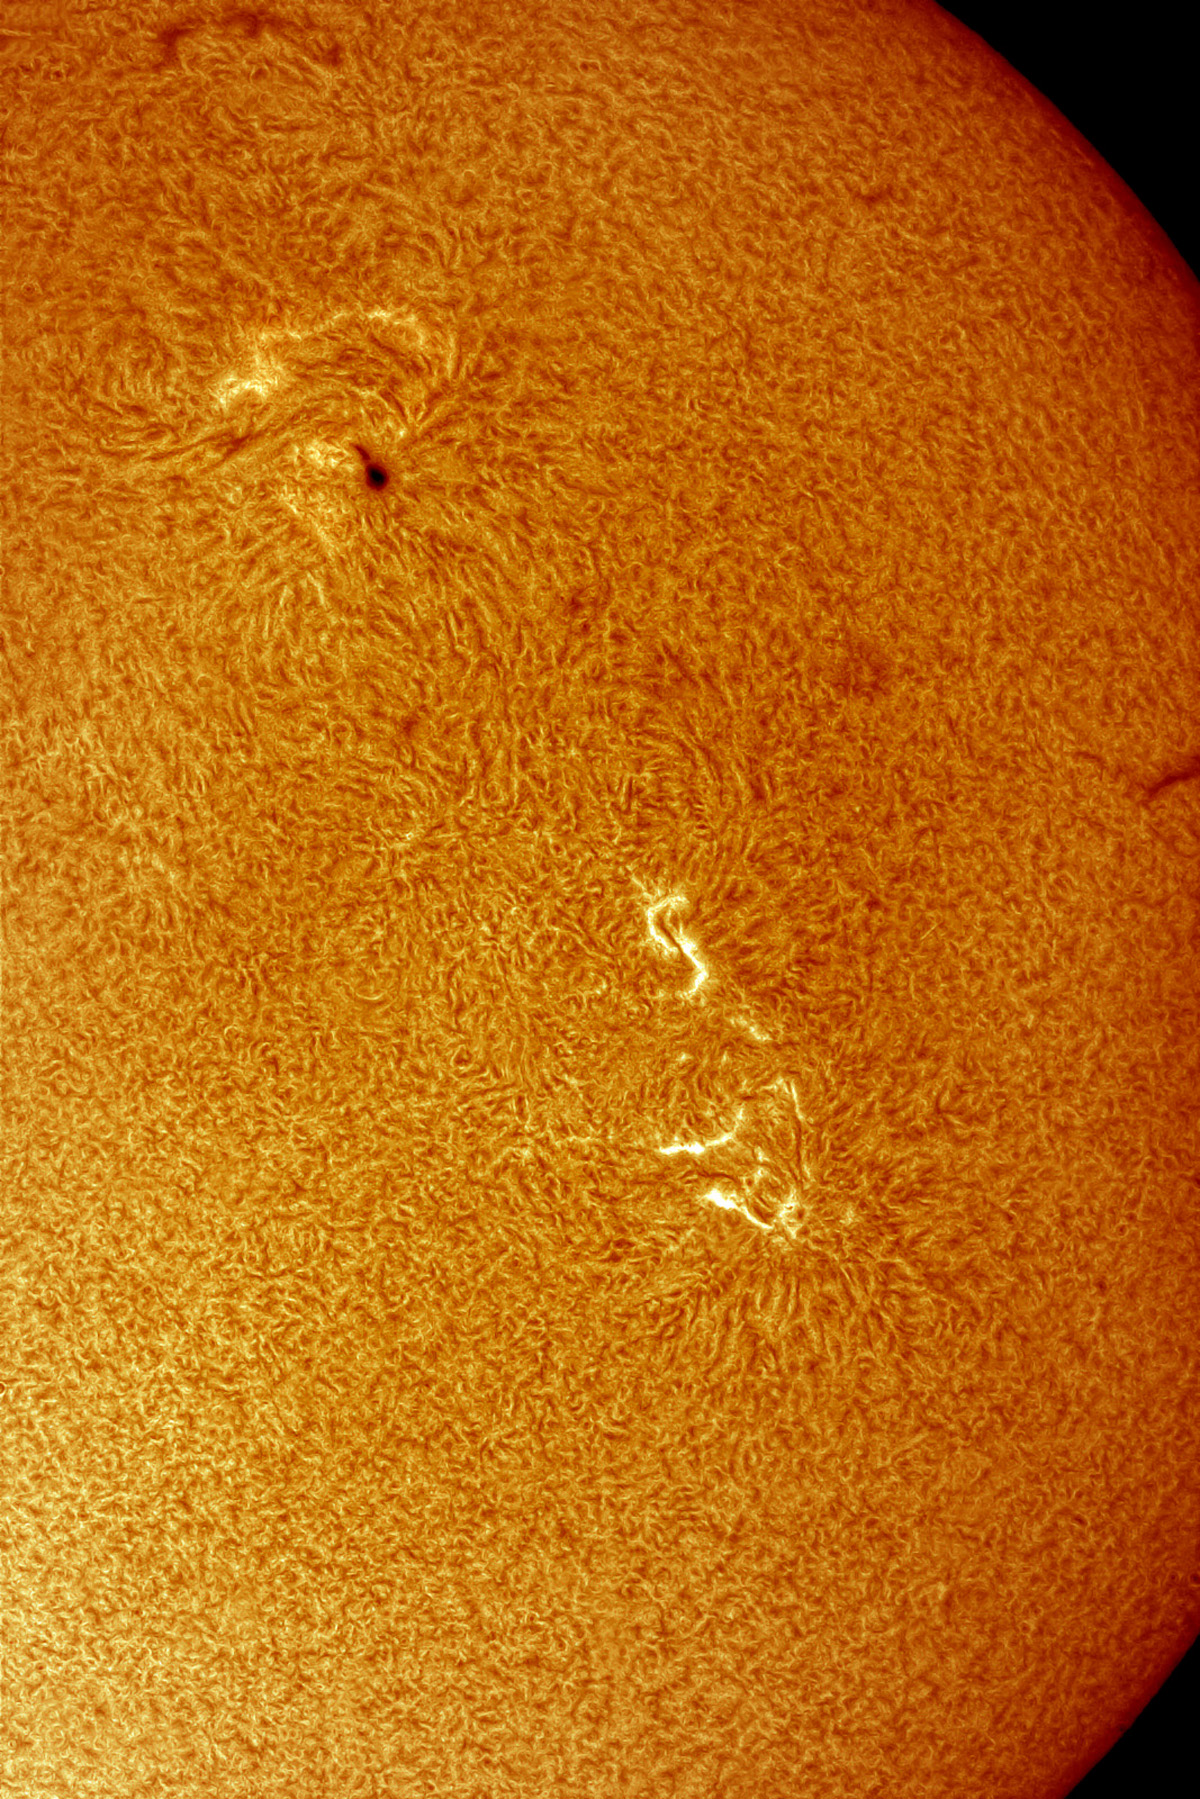 Sunspot 904 & 909 photo